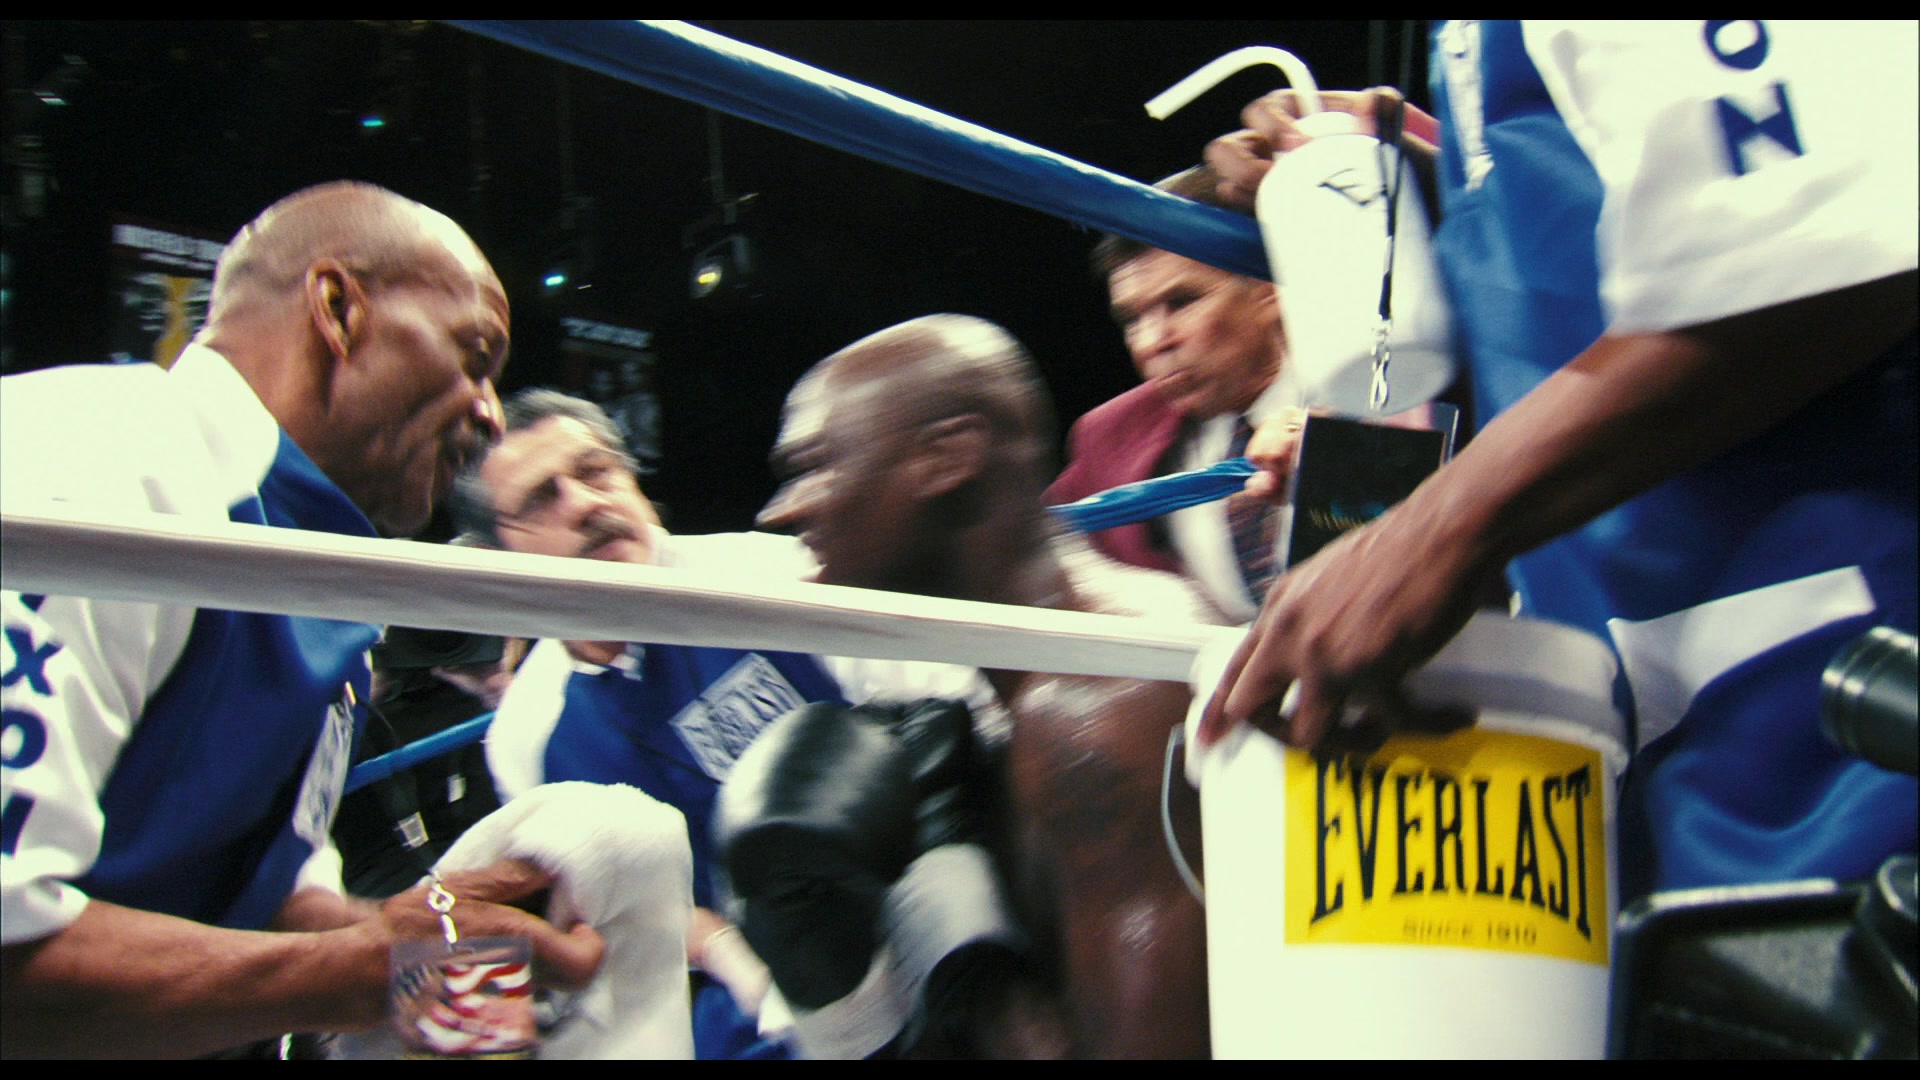 Everlast Boxing In Rocky Balboa 2006 